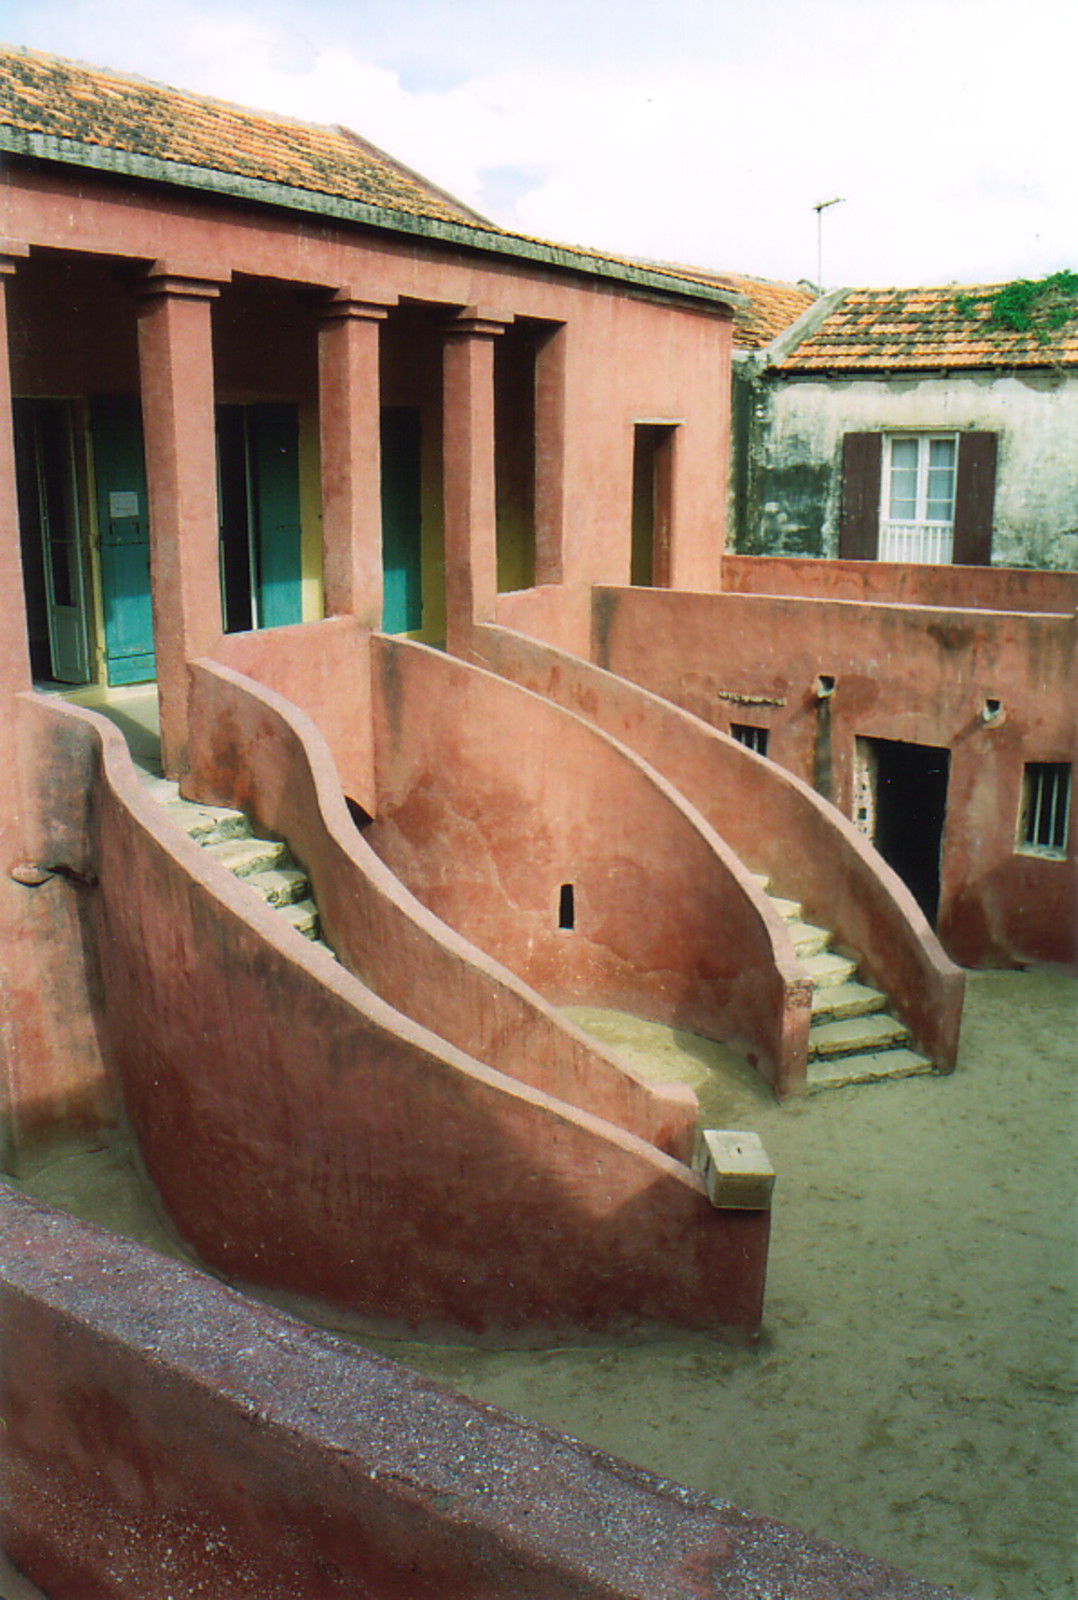 A staircase inside the Maison des Esclaves